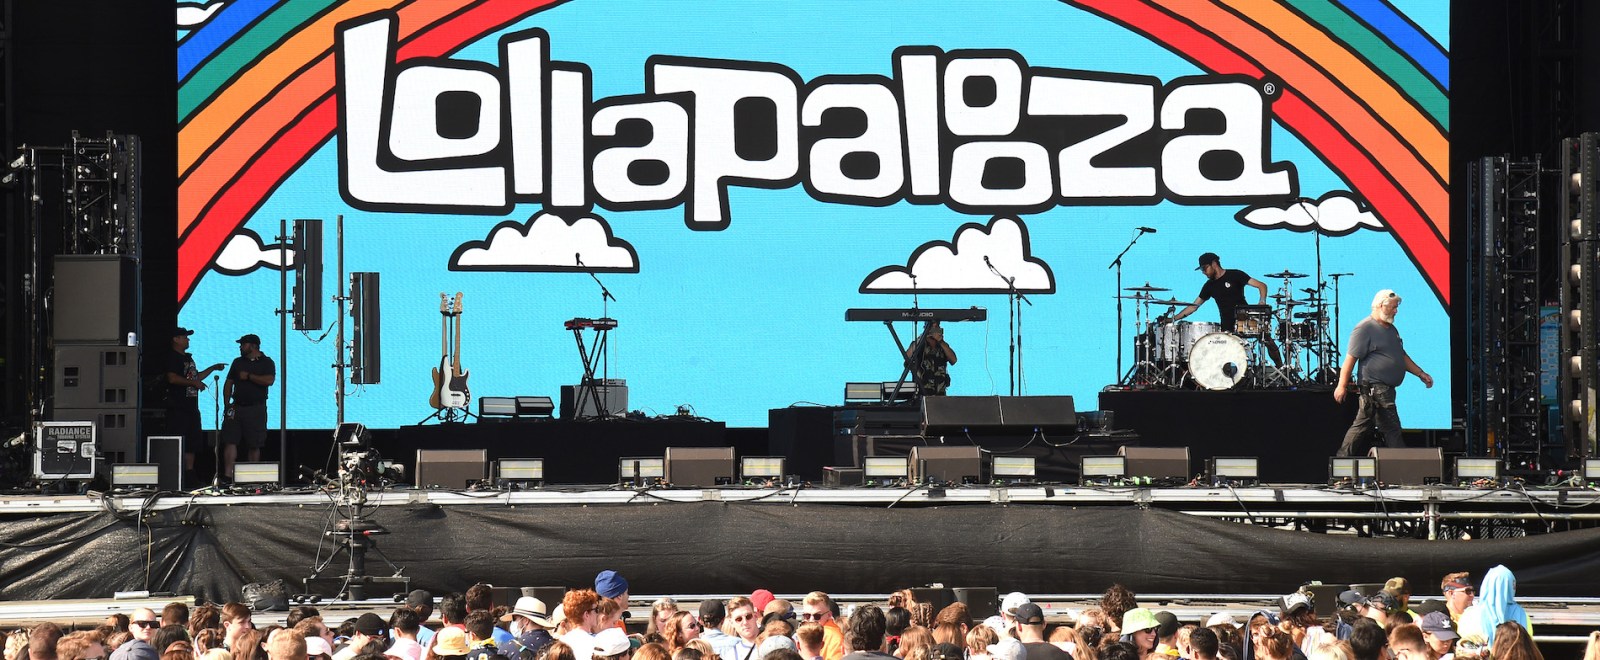 lollapalooza-festival-concert-getty-full.jpg